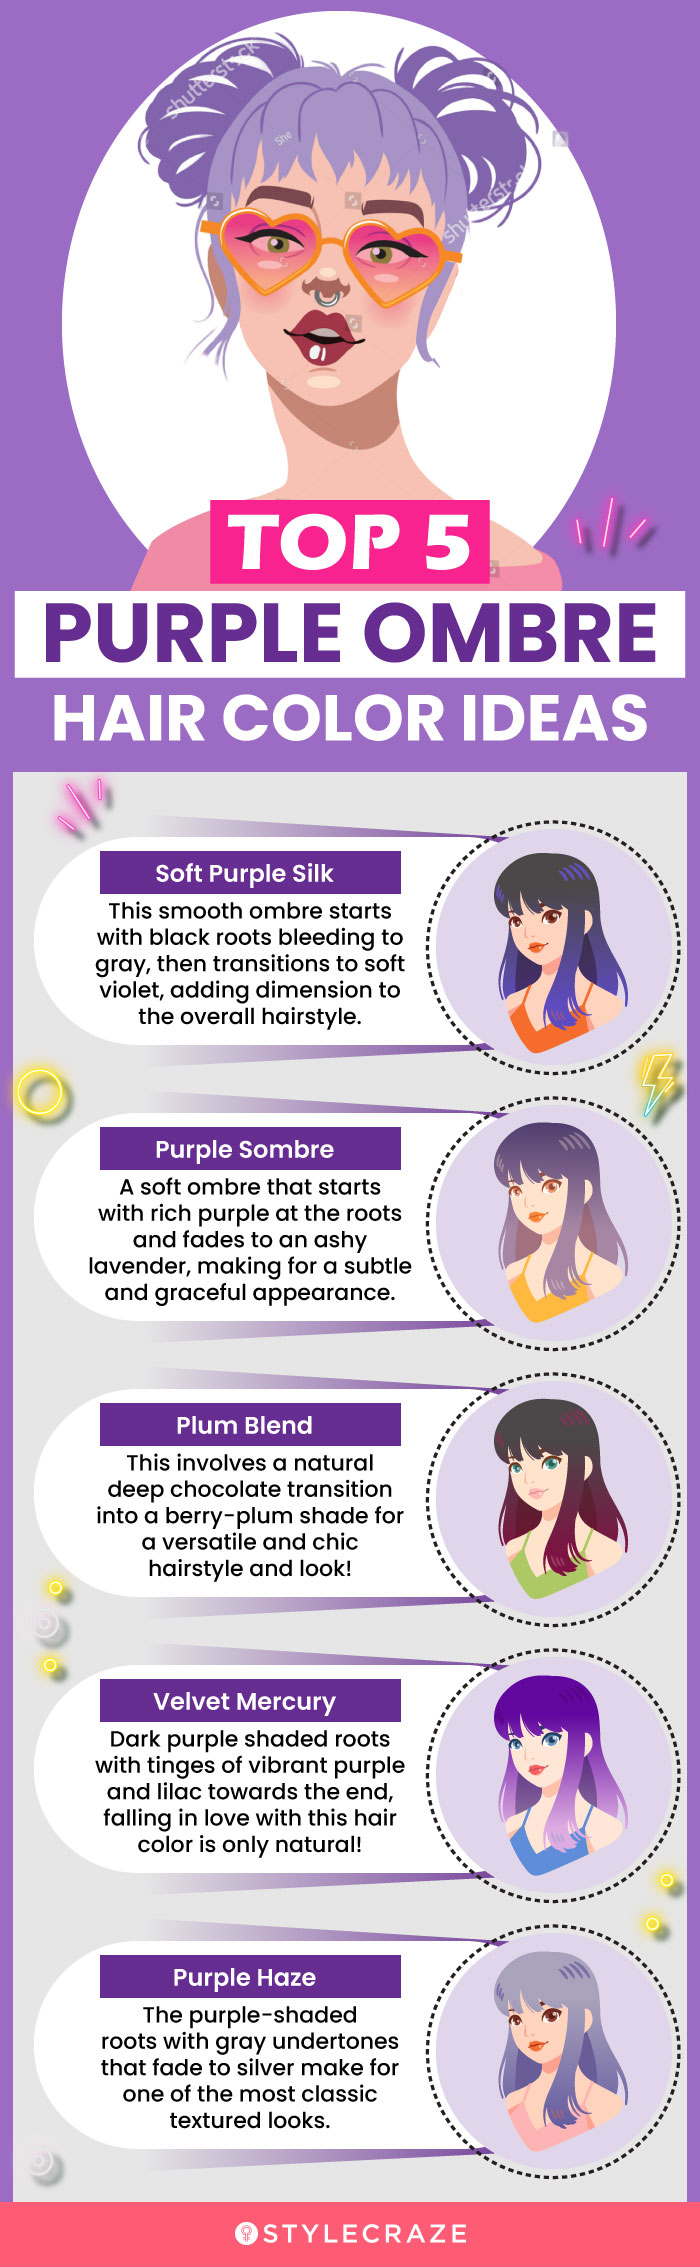 top 5 purple ombre hair color ideas (infographic)